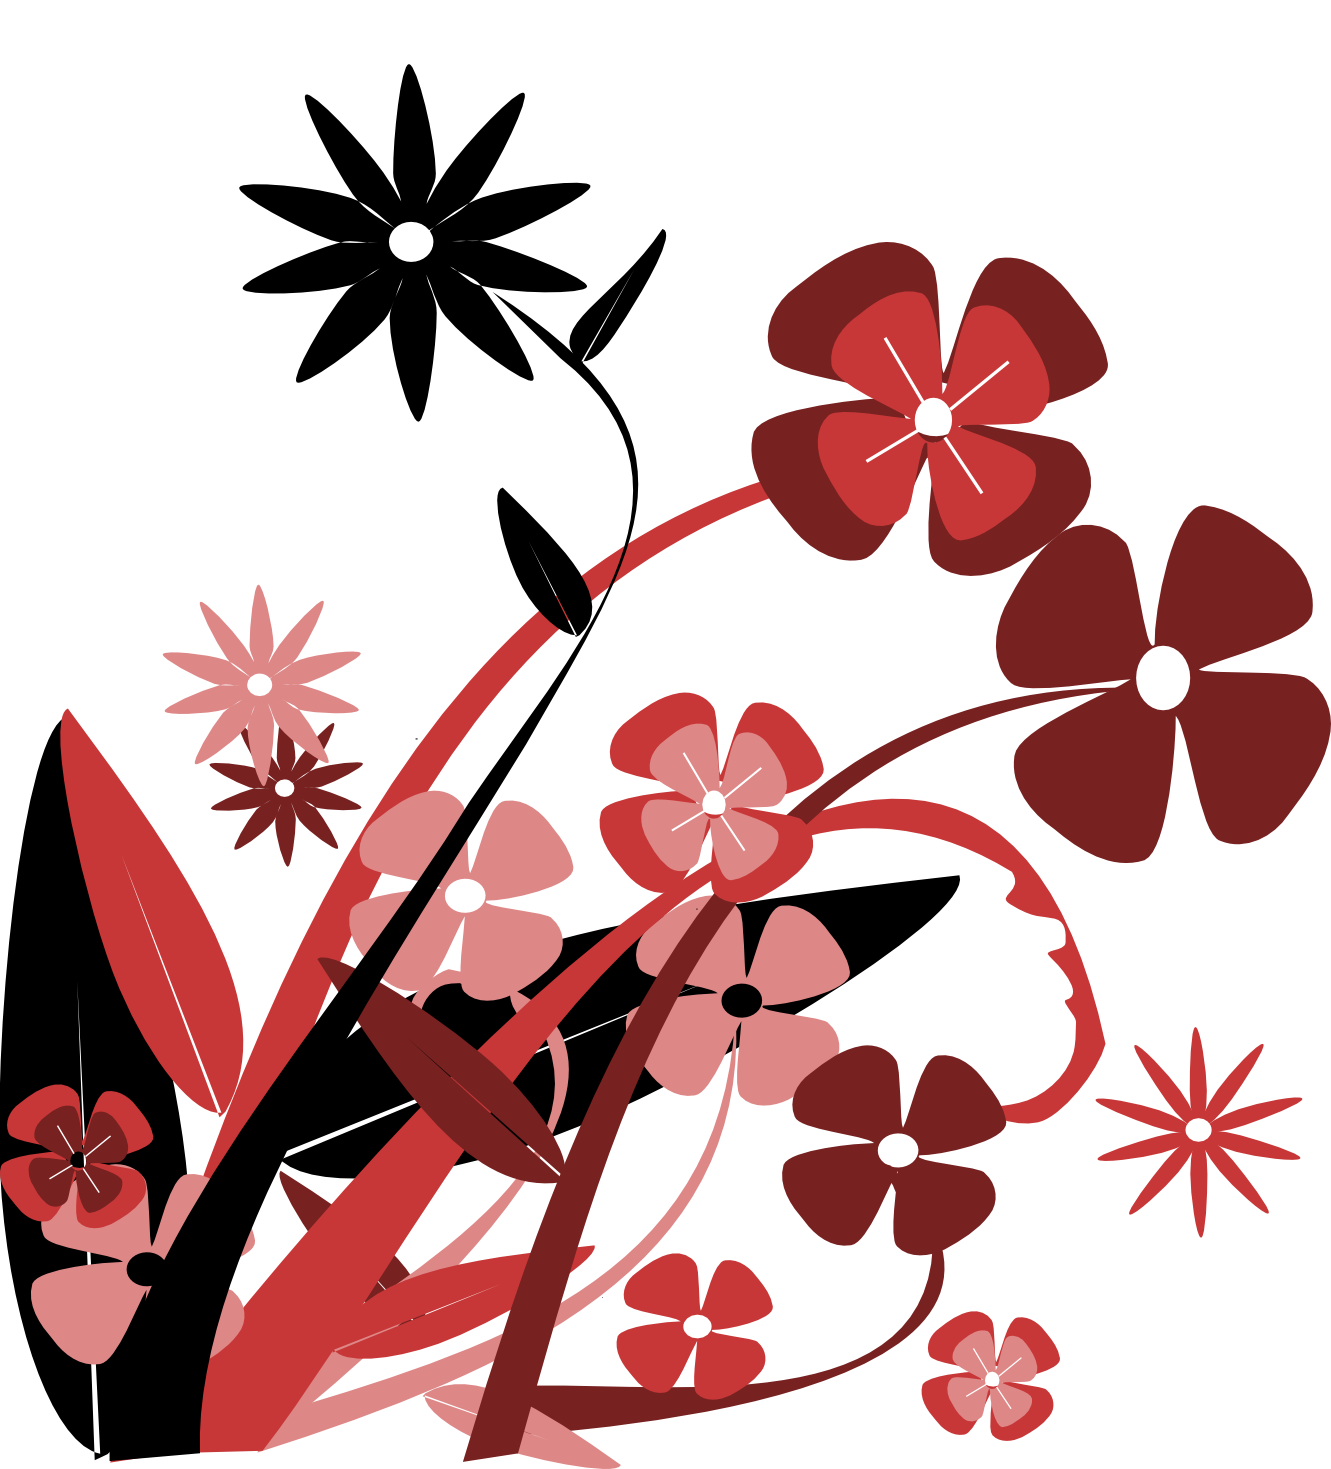 Flower Vector Graphic - ClipArt Best